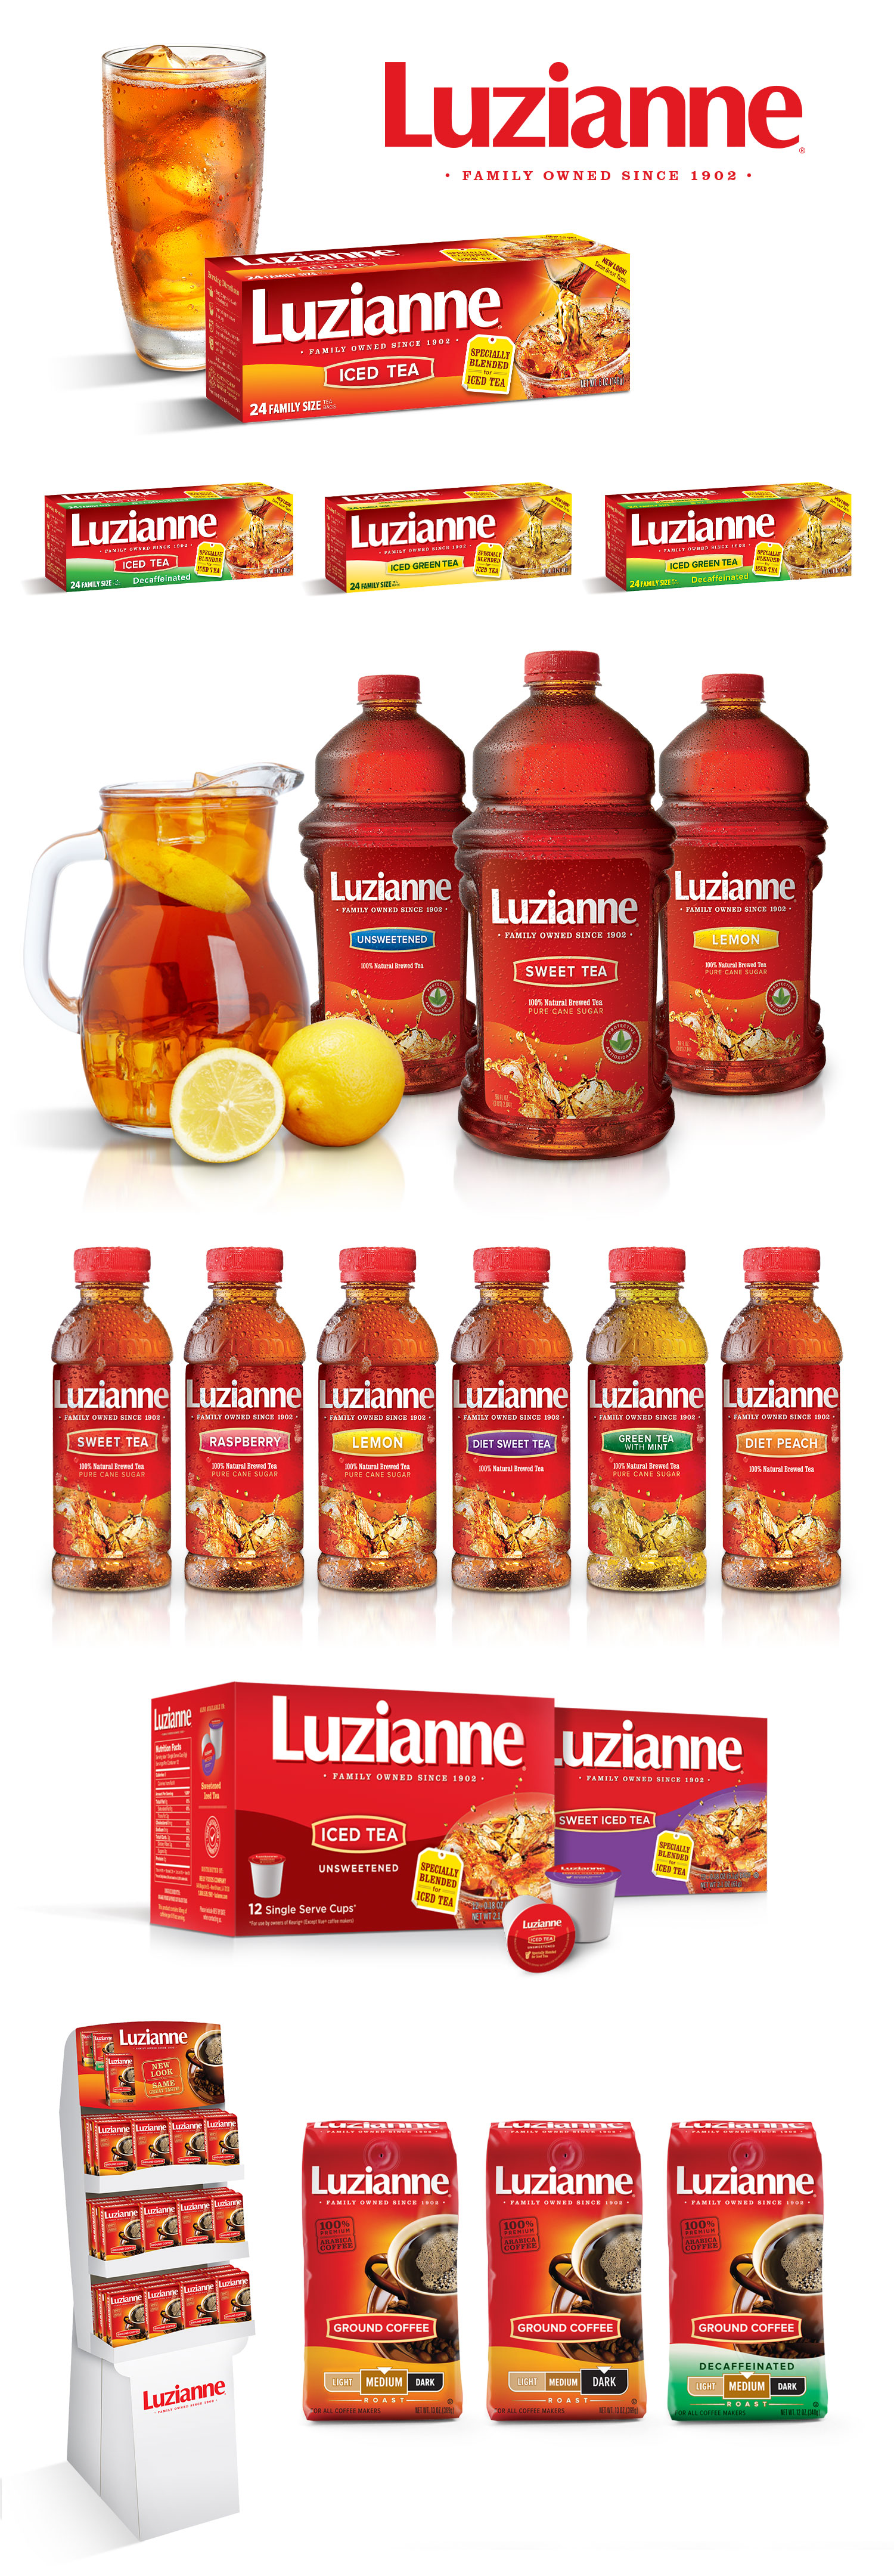 Luzianne Packaging Design